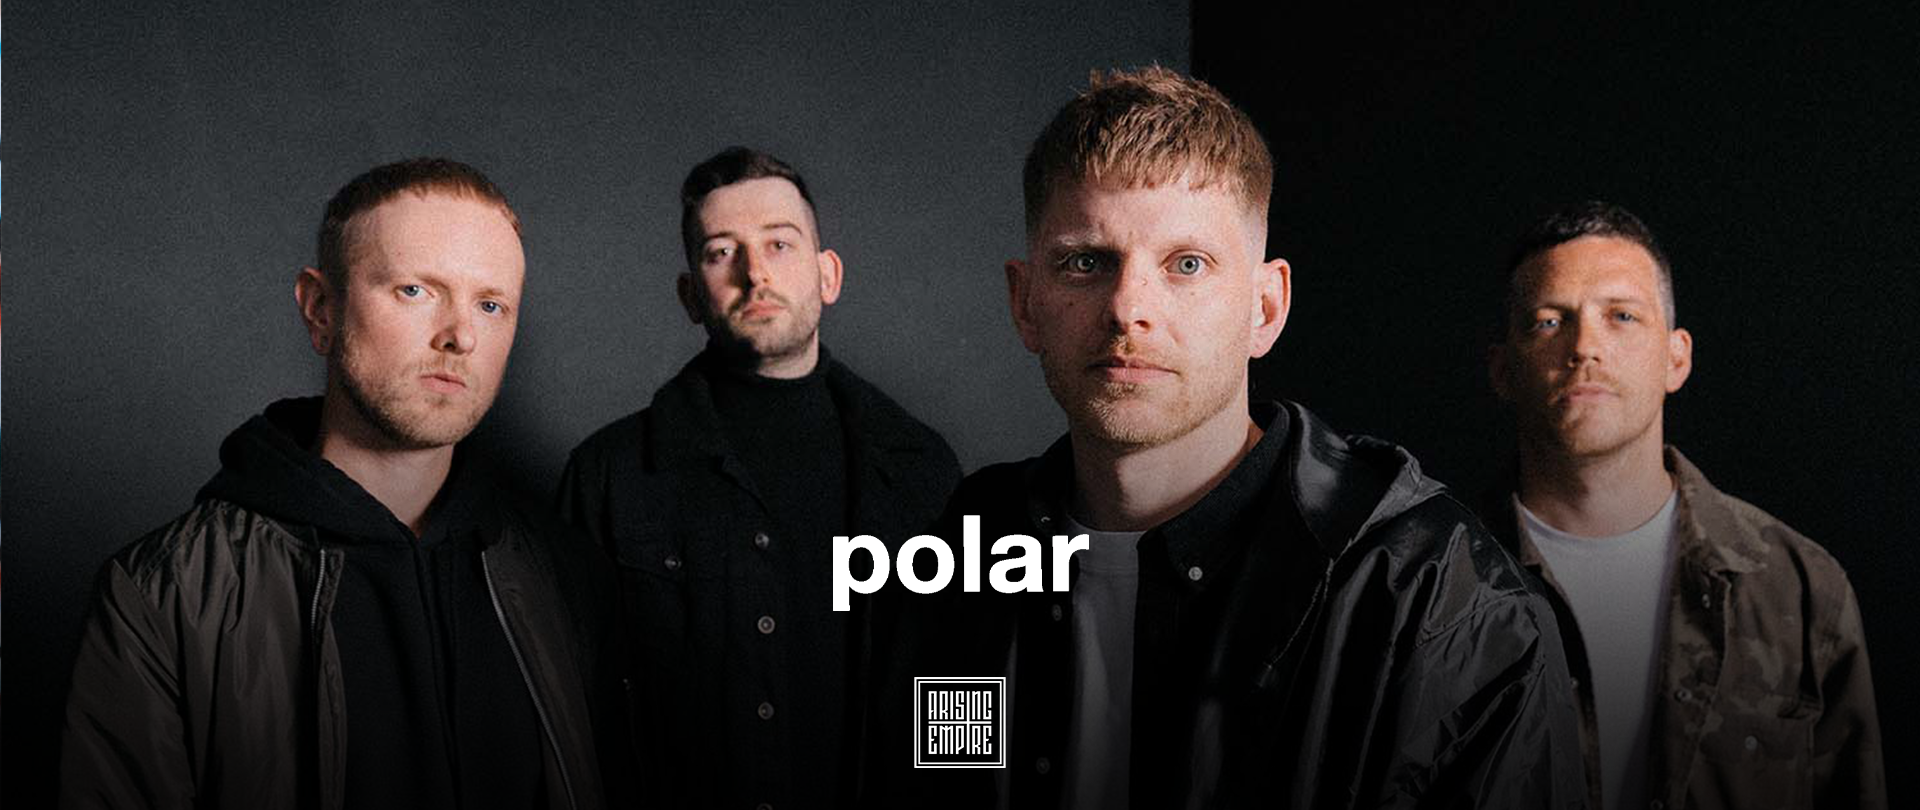 Polar at Arising Empire • Official Online Shop / EN